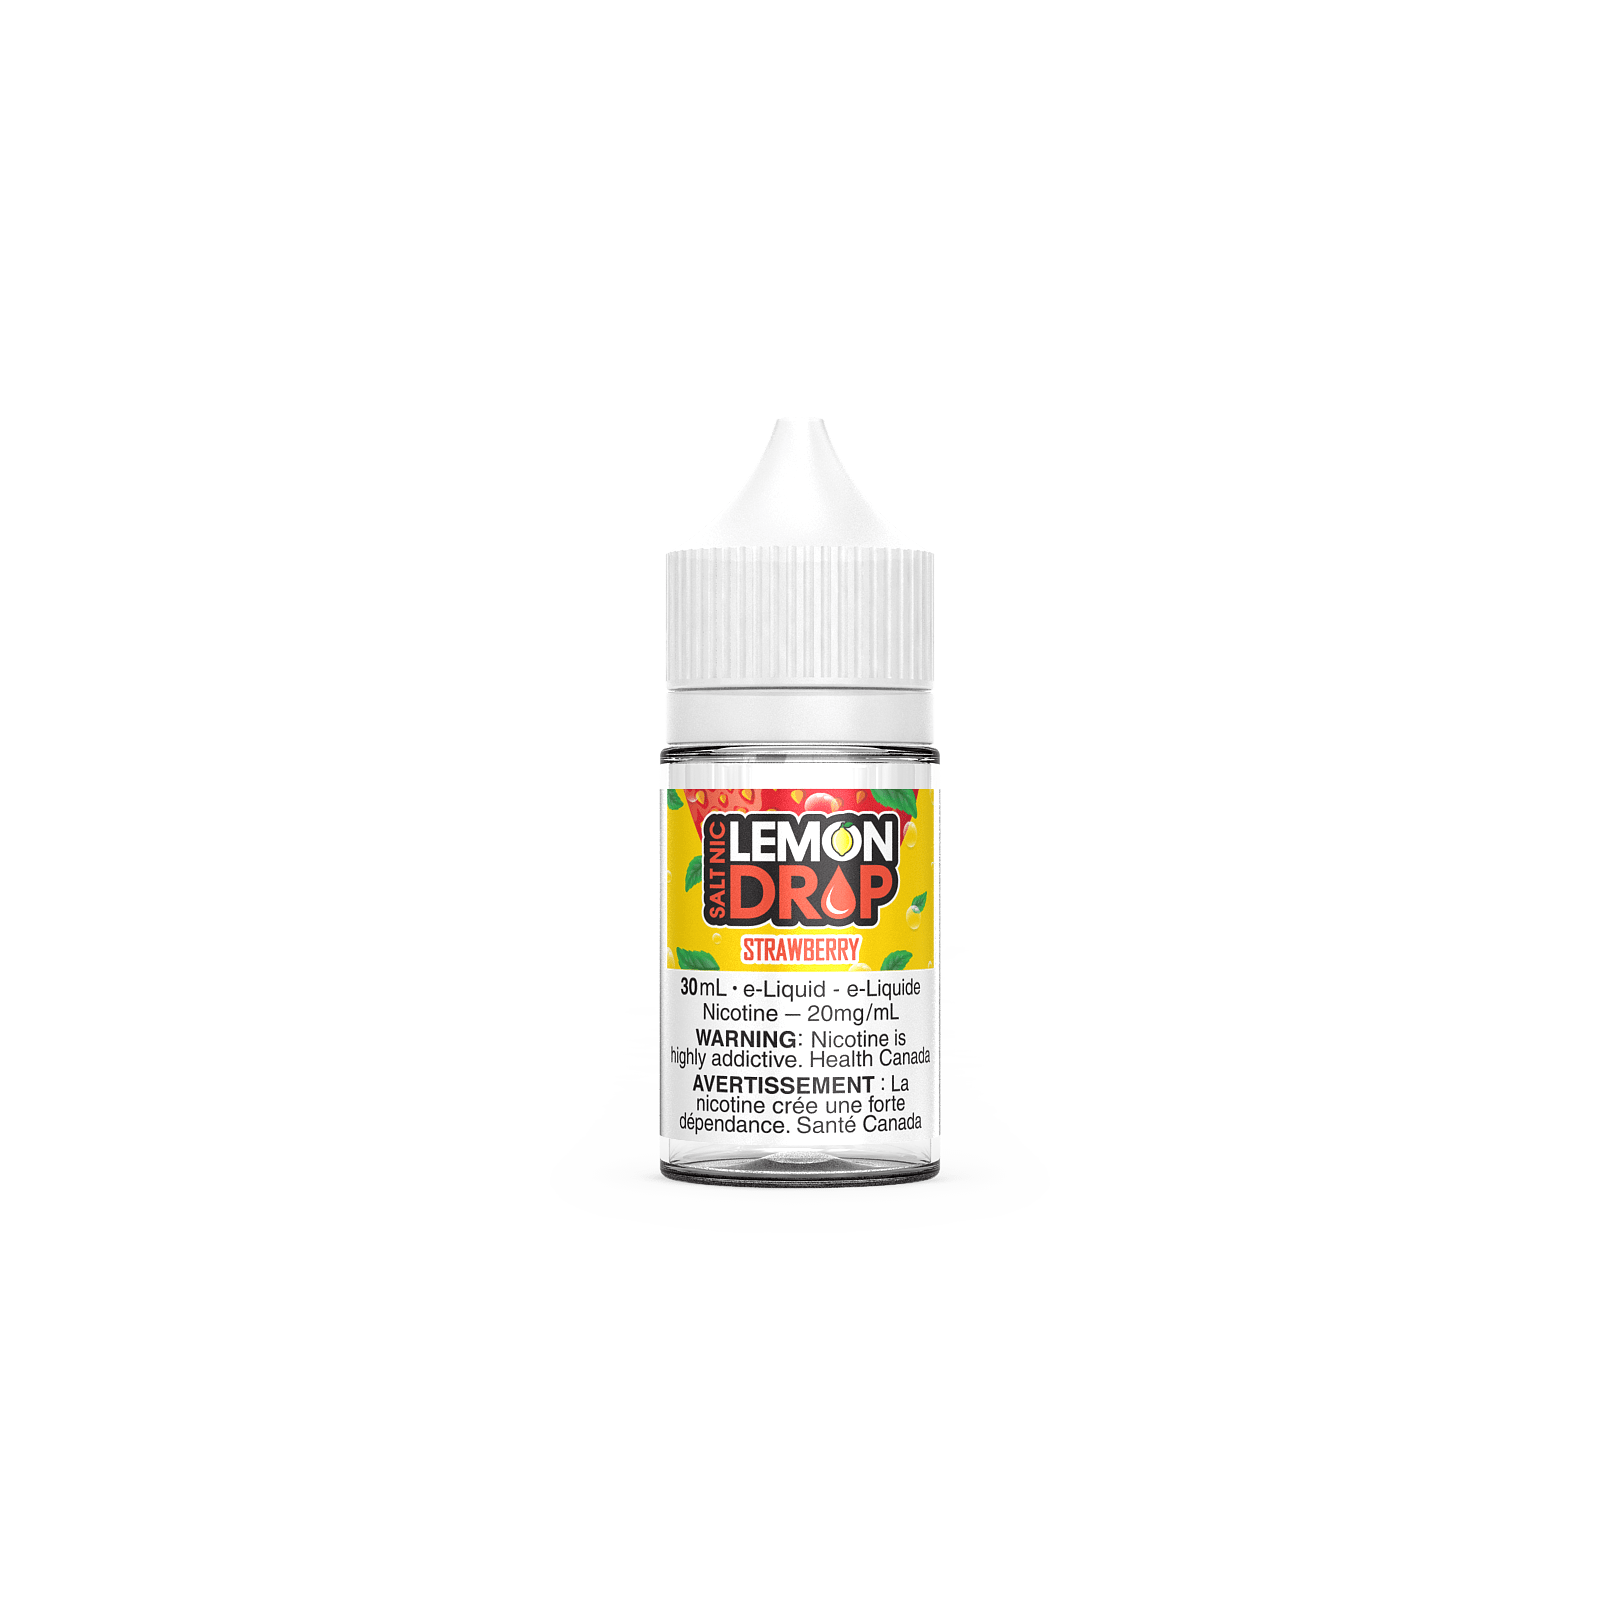 Lemon Drop Salt - Strawberry available on Canada online vape shop